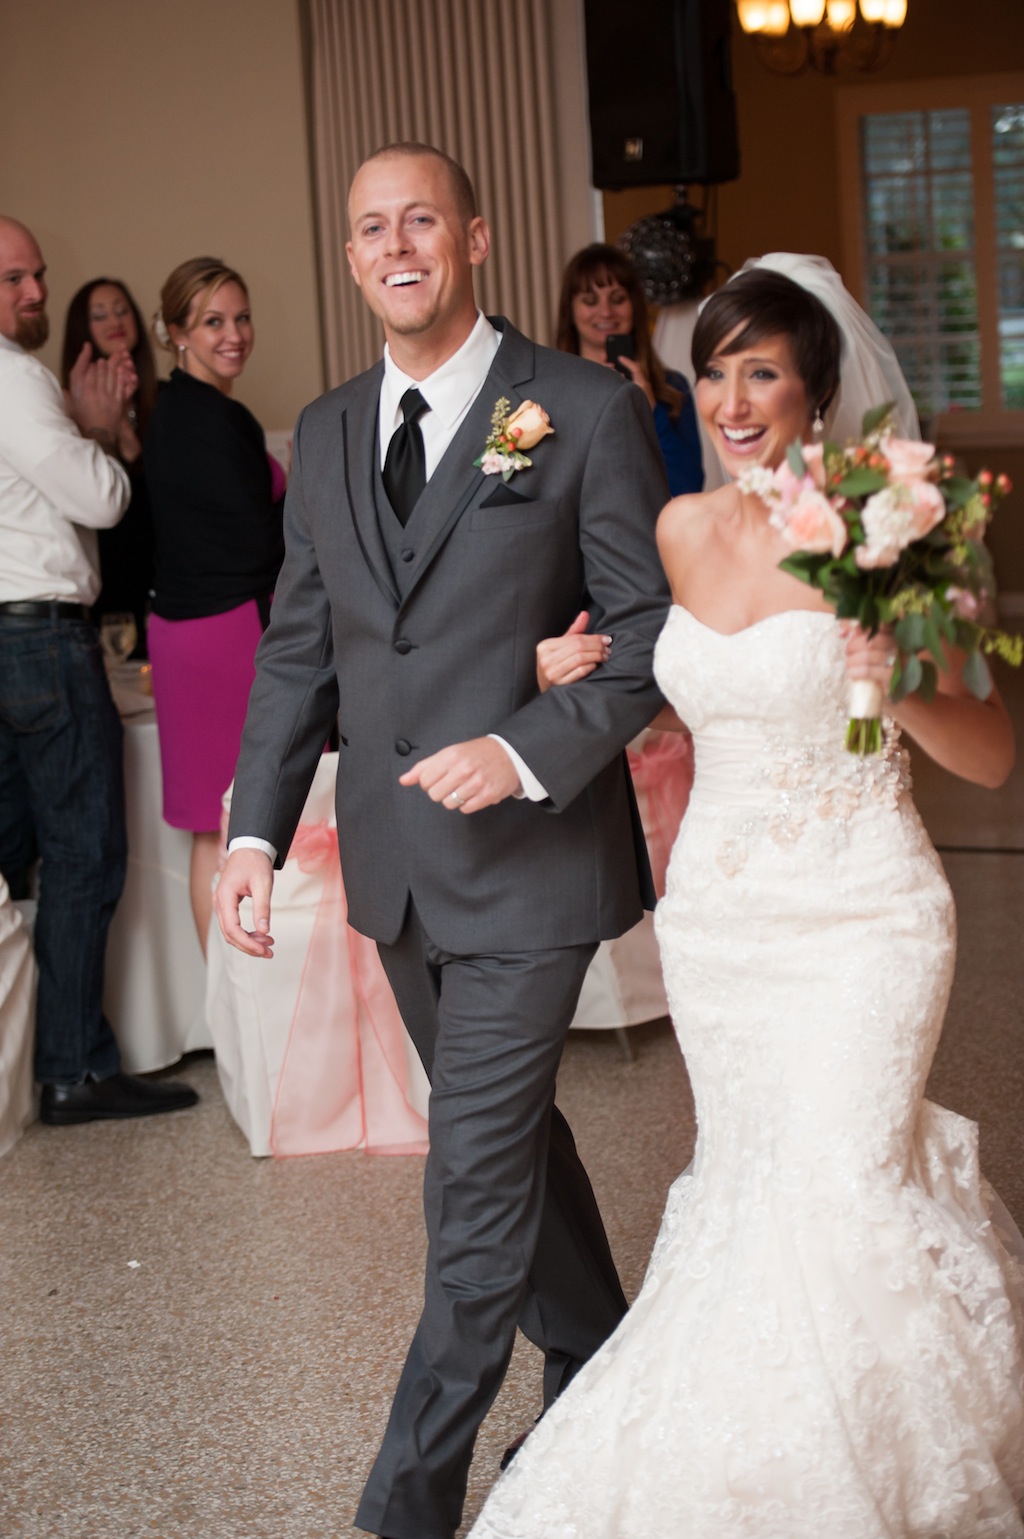 Davis Island Garden Club Wedding - Coral and Mint Green Natural Wedding - Tampa Wedding Photographer Sarah & Ben (43)